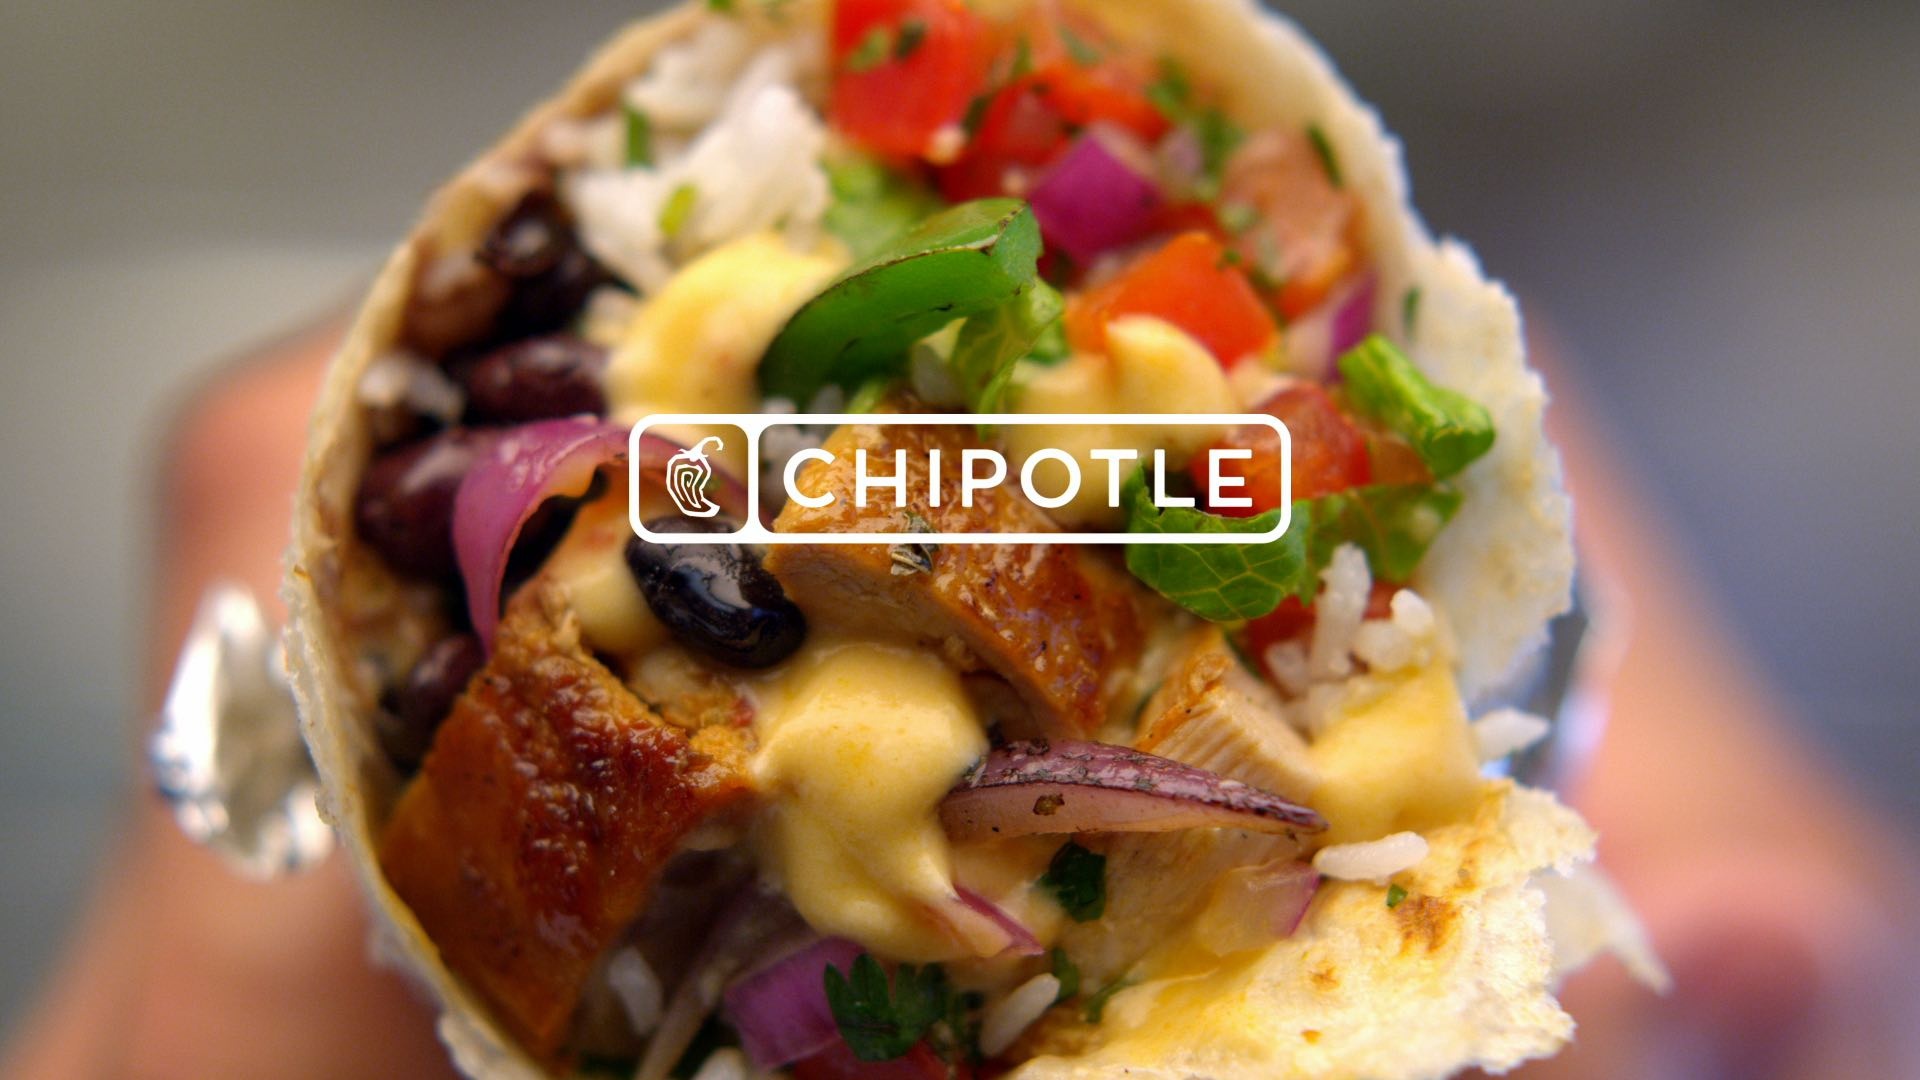 Chipotle: Mexican cuisine, Tacos, Burritos, Salads, Burrito bowls, Fast-food chain. 1920x1080 Full HD Wallpaper.